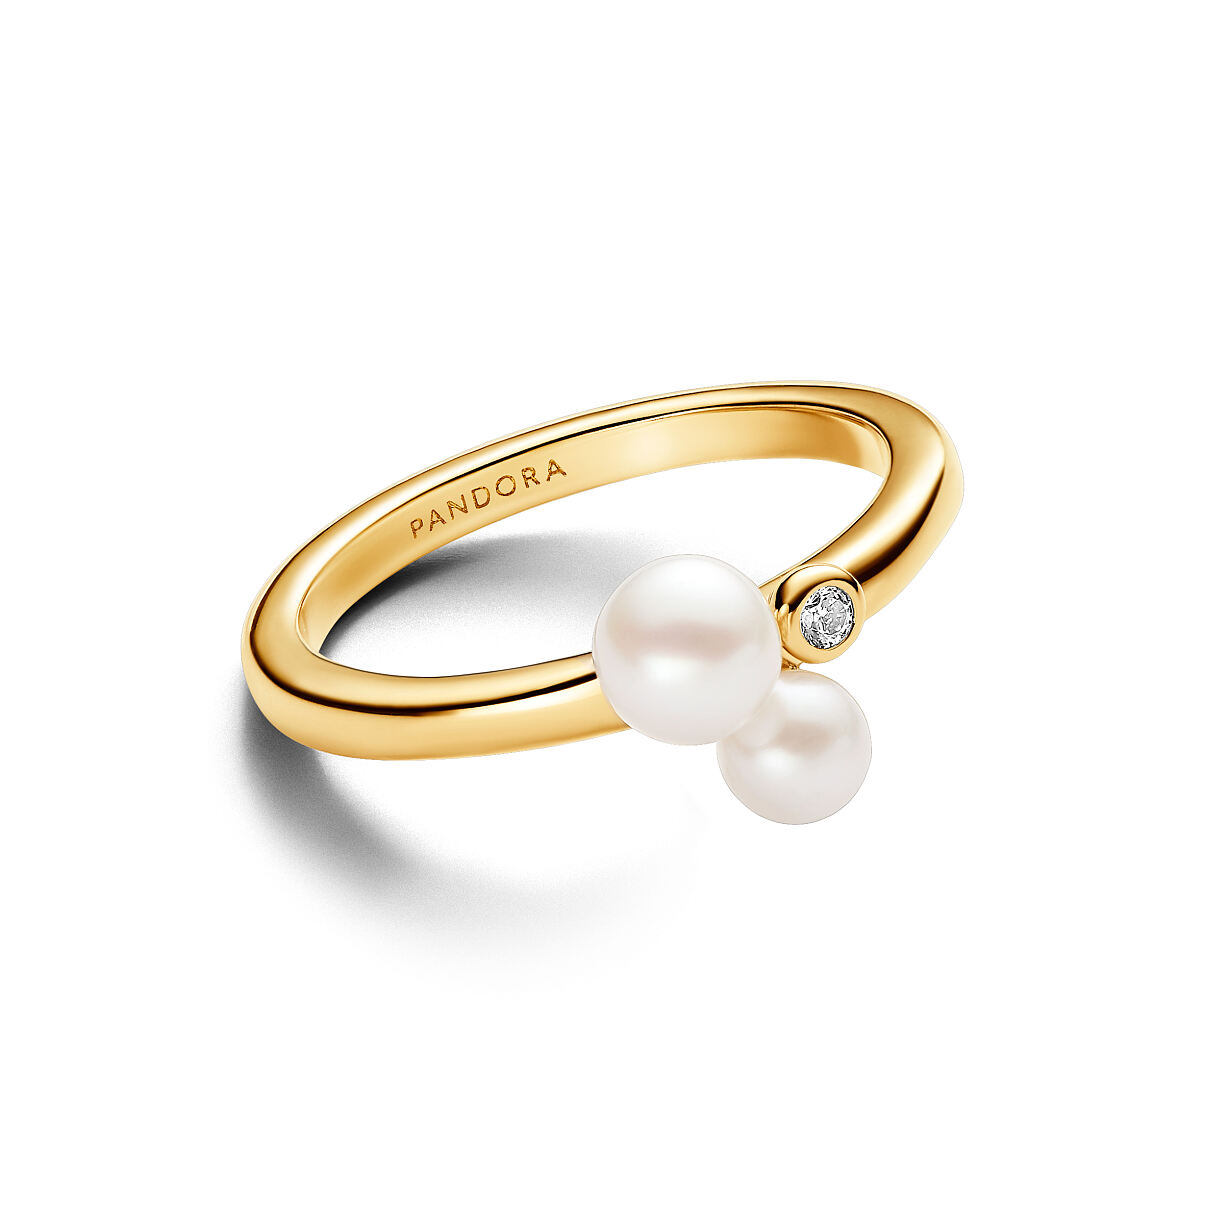 Pandora_Ring_14k Gold-plated_Freshwater Pearls_Cubic Zirconia_163156C01_99,00 Euro (3)